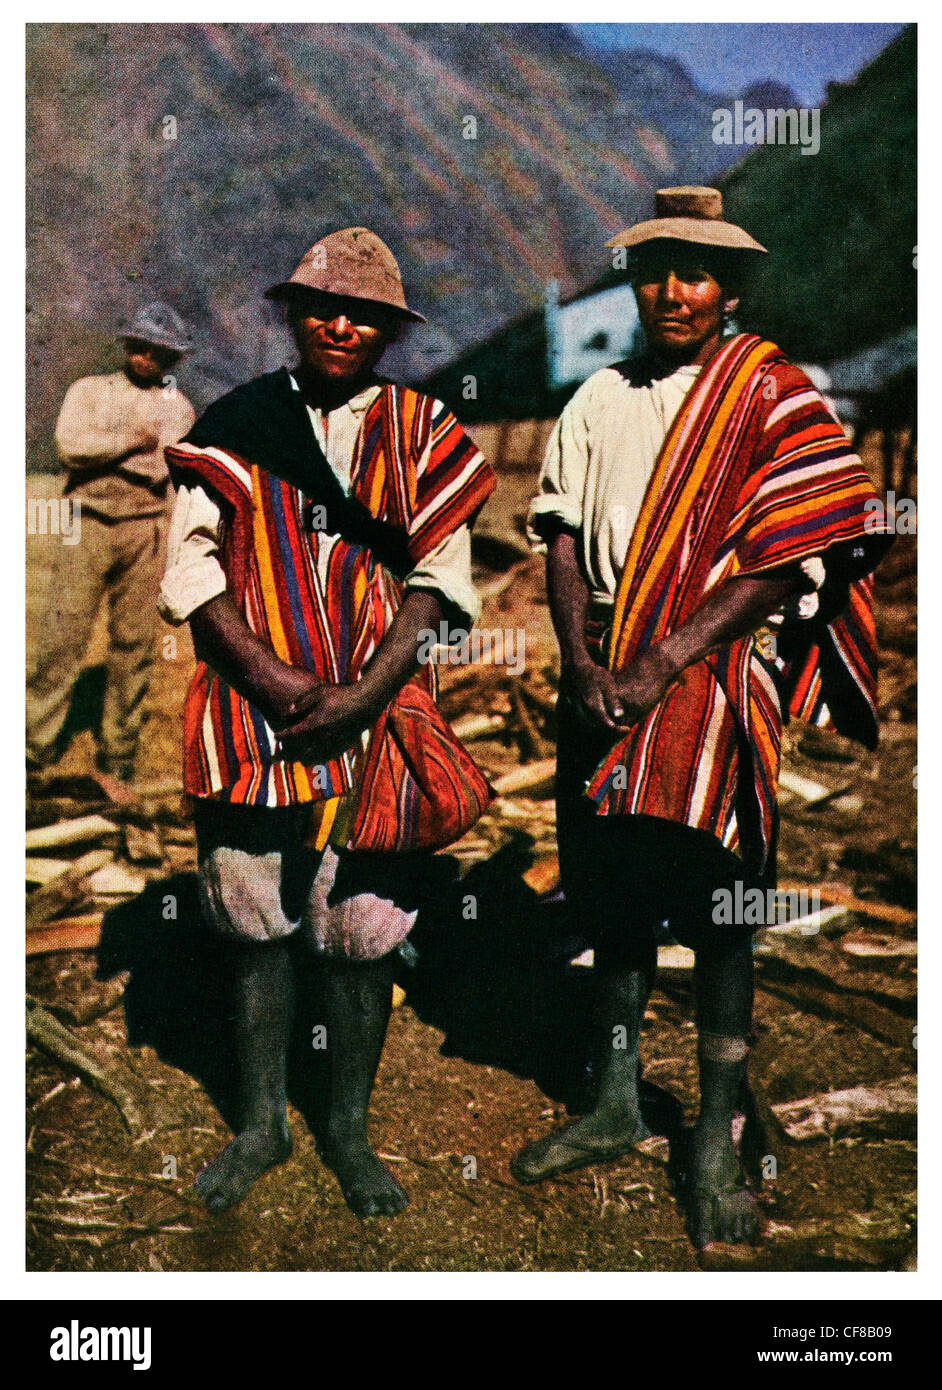 1927-Anden-Kleidung-poncho Stockfotografie - Alamy